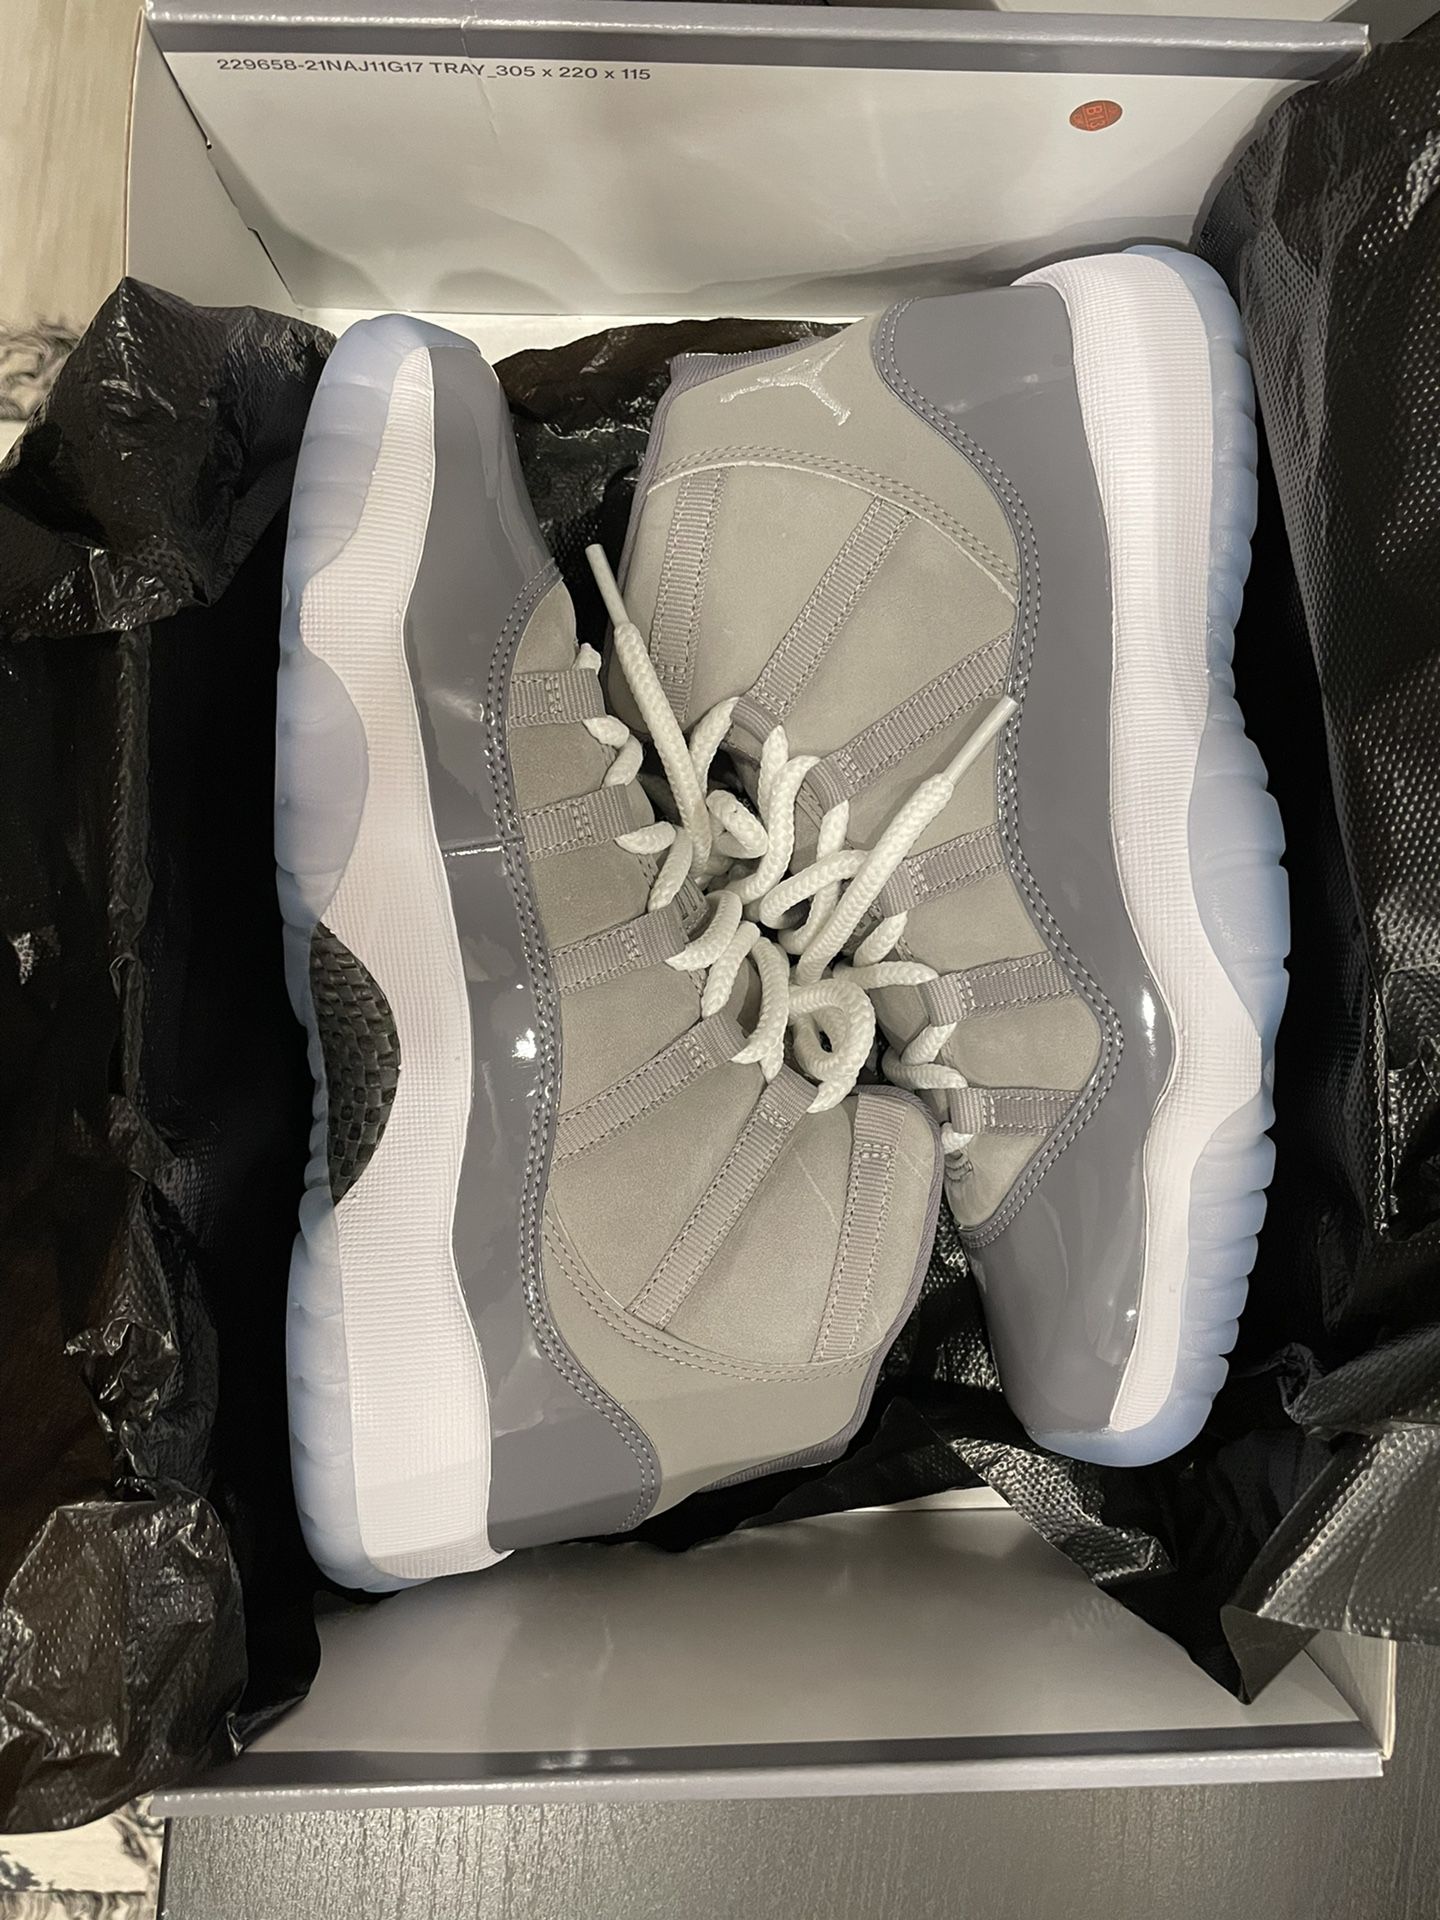 Jordan 11 “Cool Grey” Size 6.5